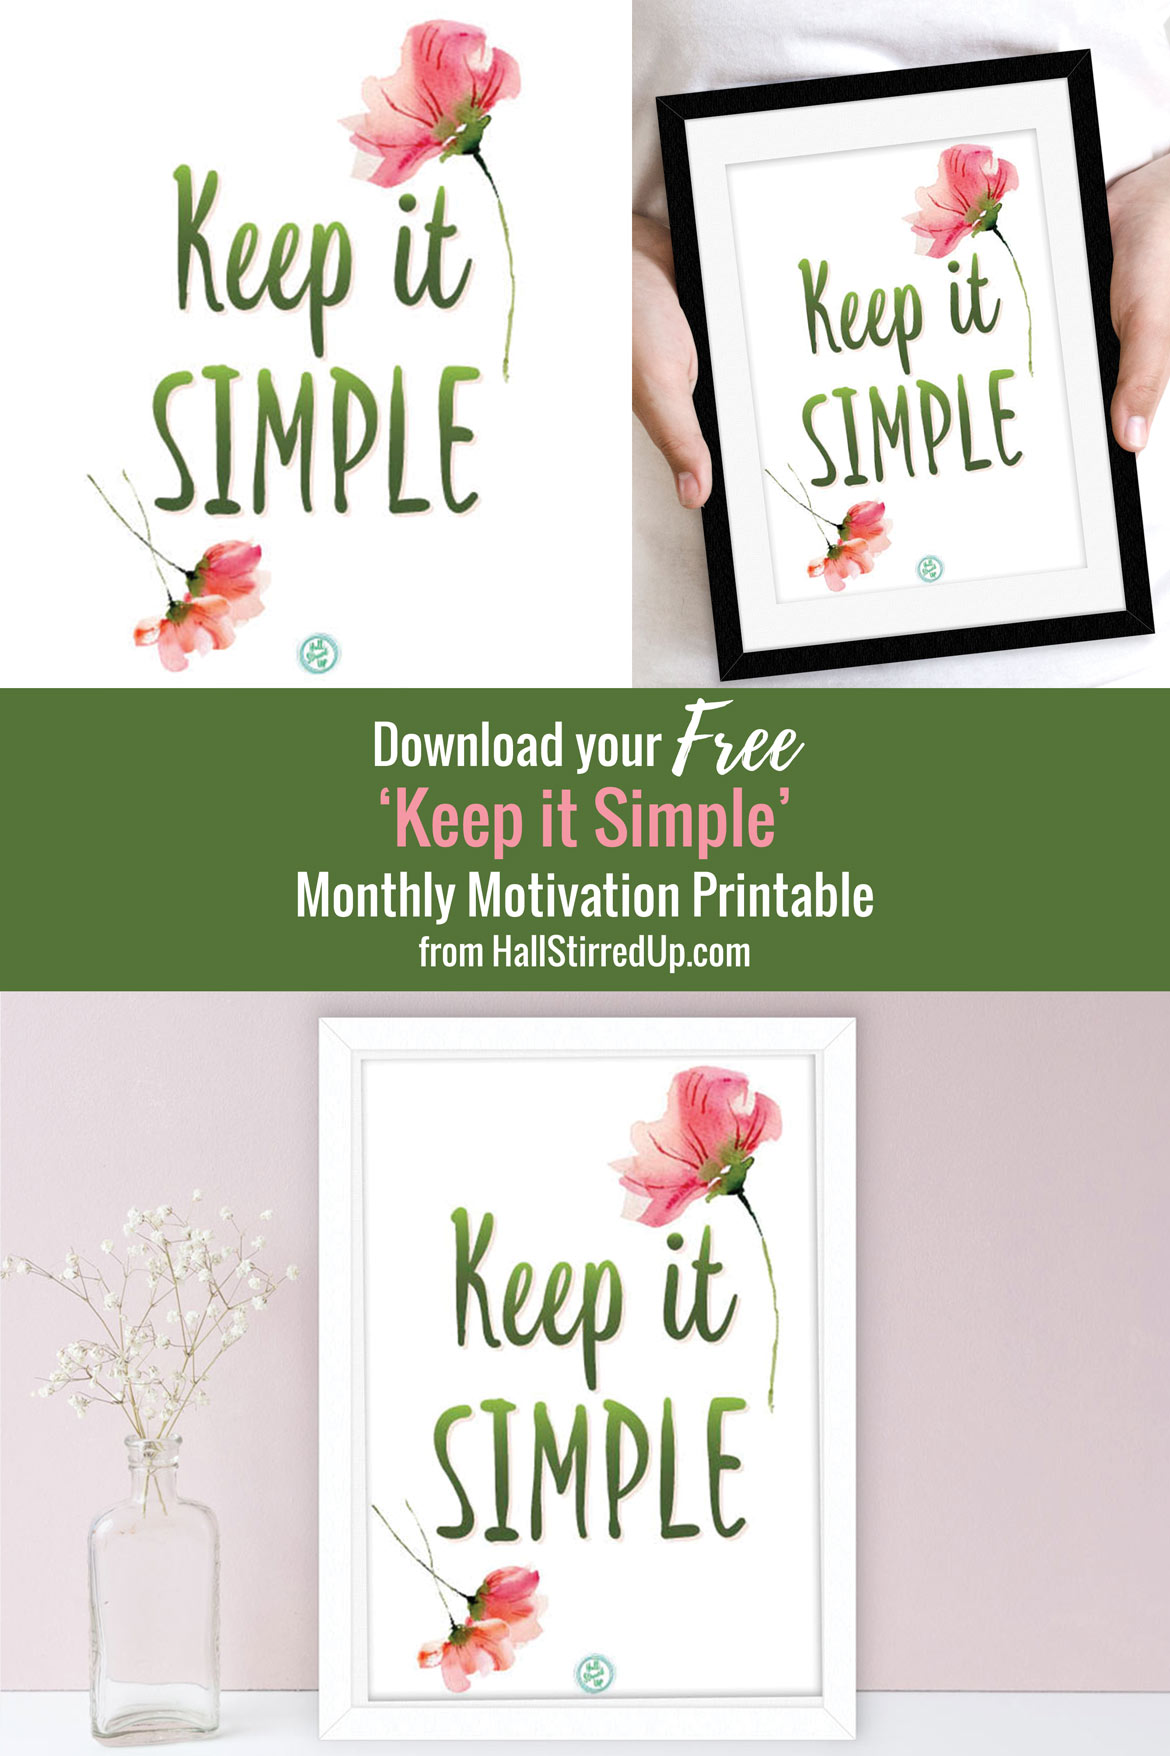 Enjoy Simple Pleasures Monthly Motivation includes printable